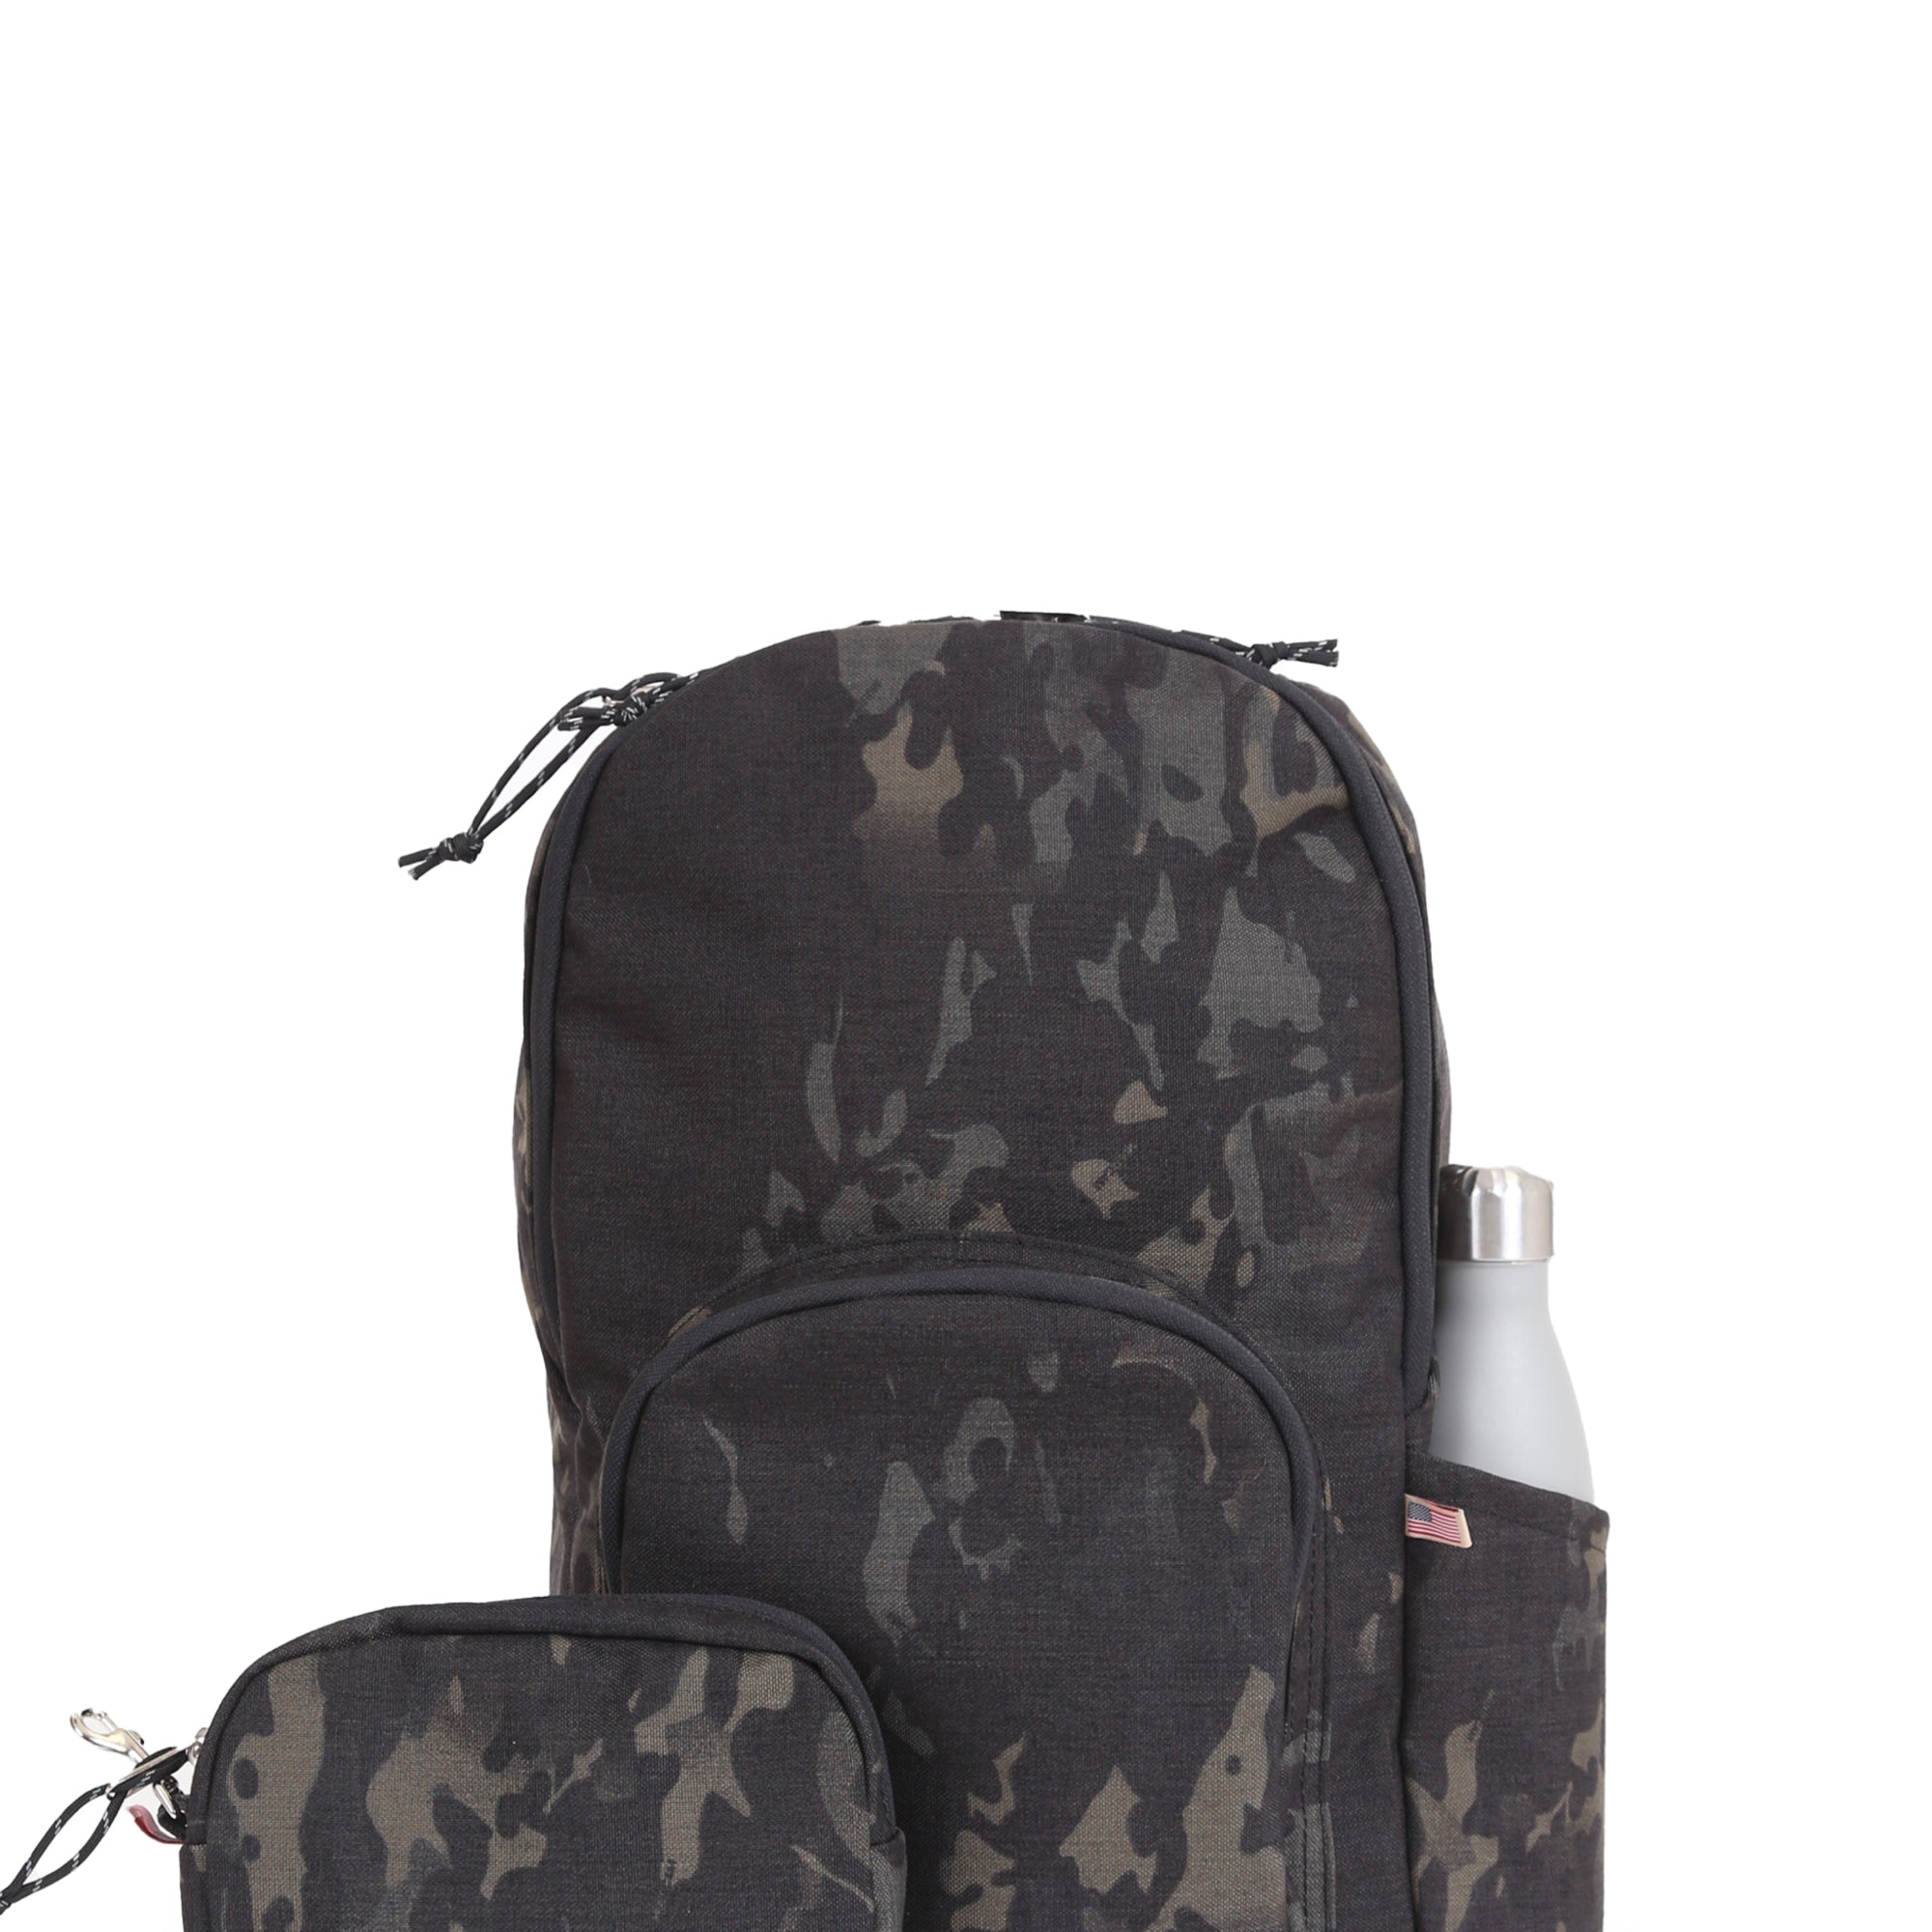 Black 20L Everyday Commuter Backpack